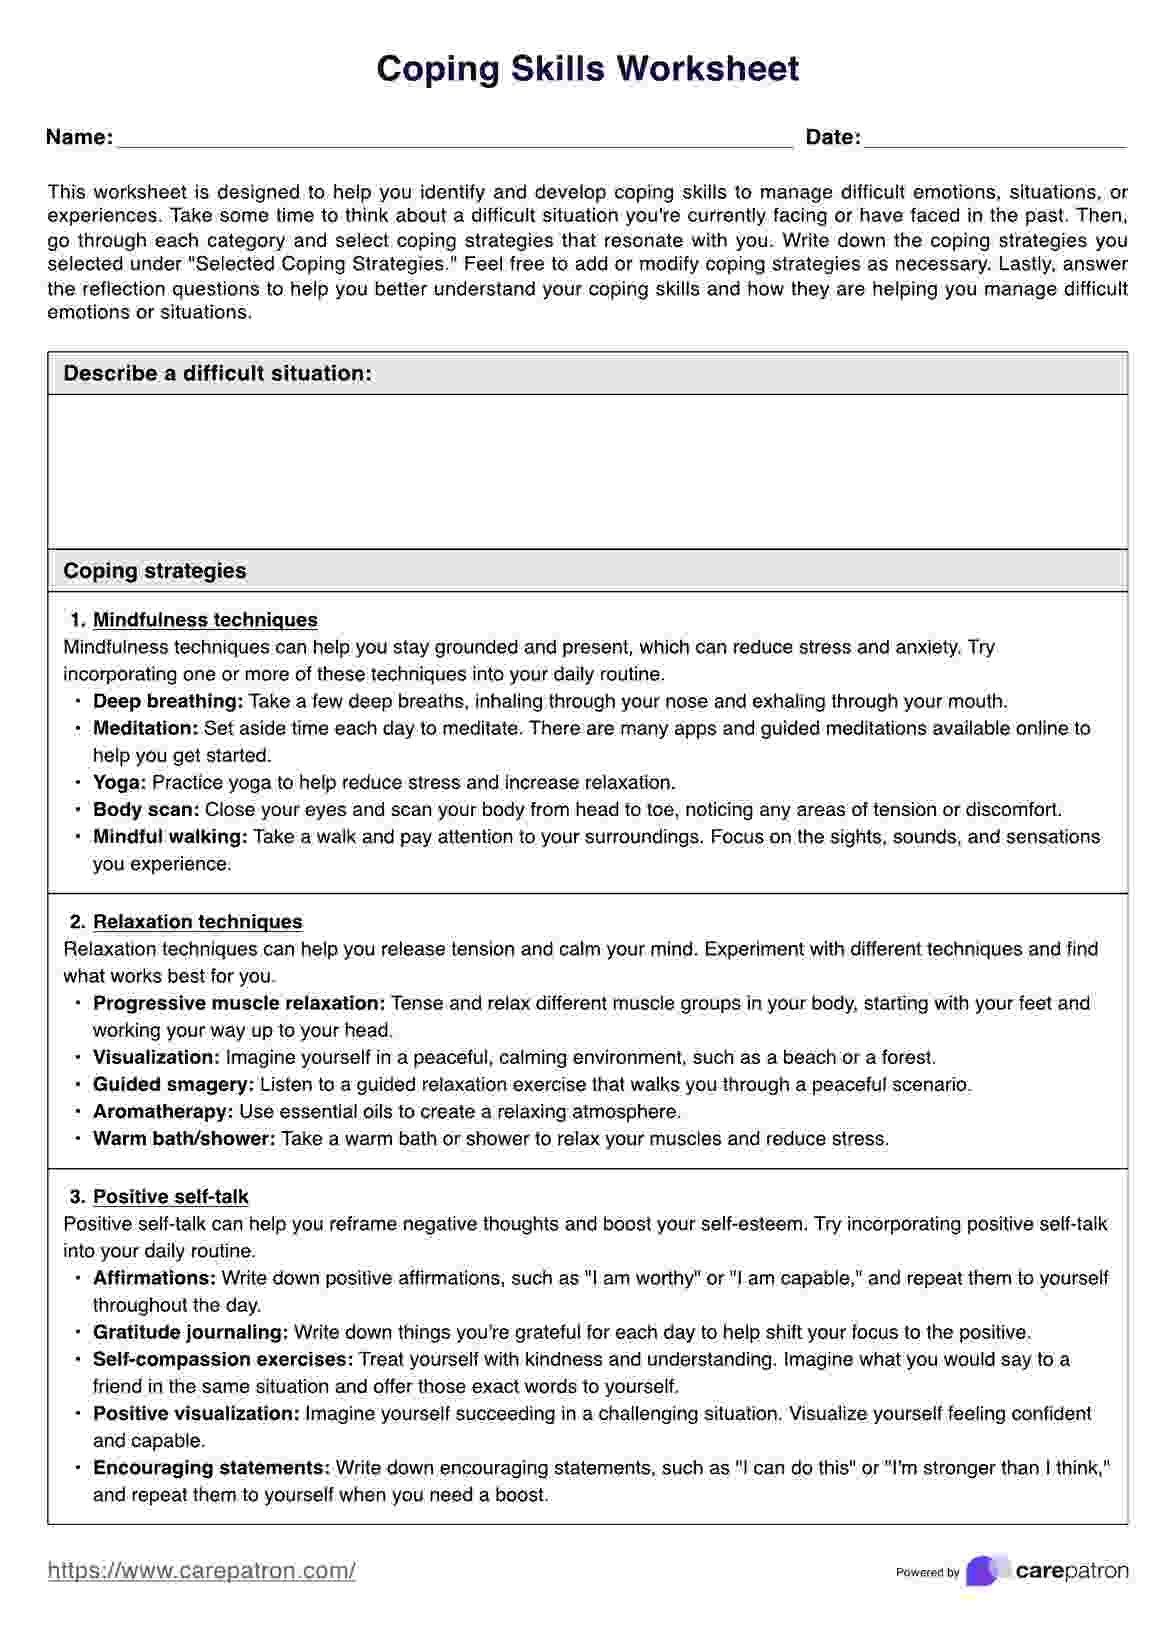 Coping Skills Worksheets PDF Example